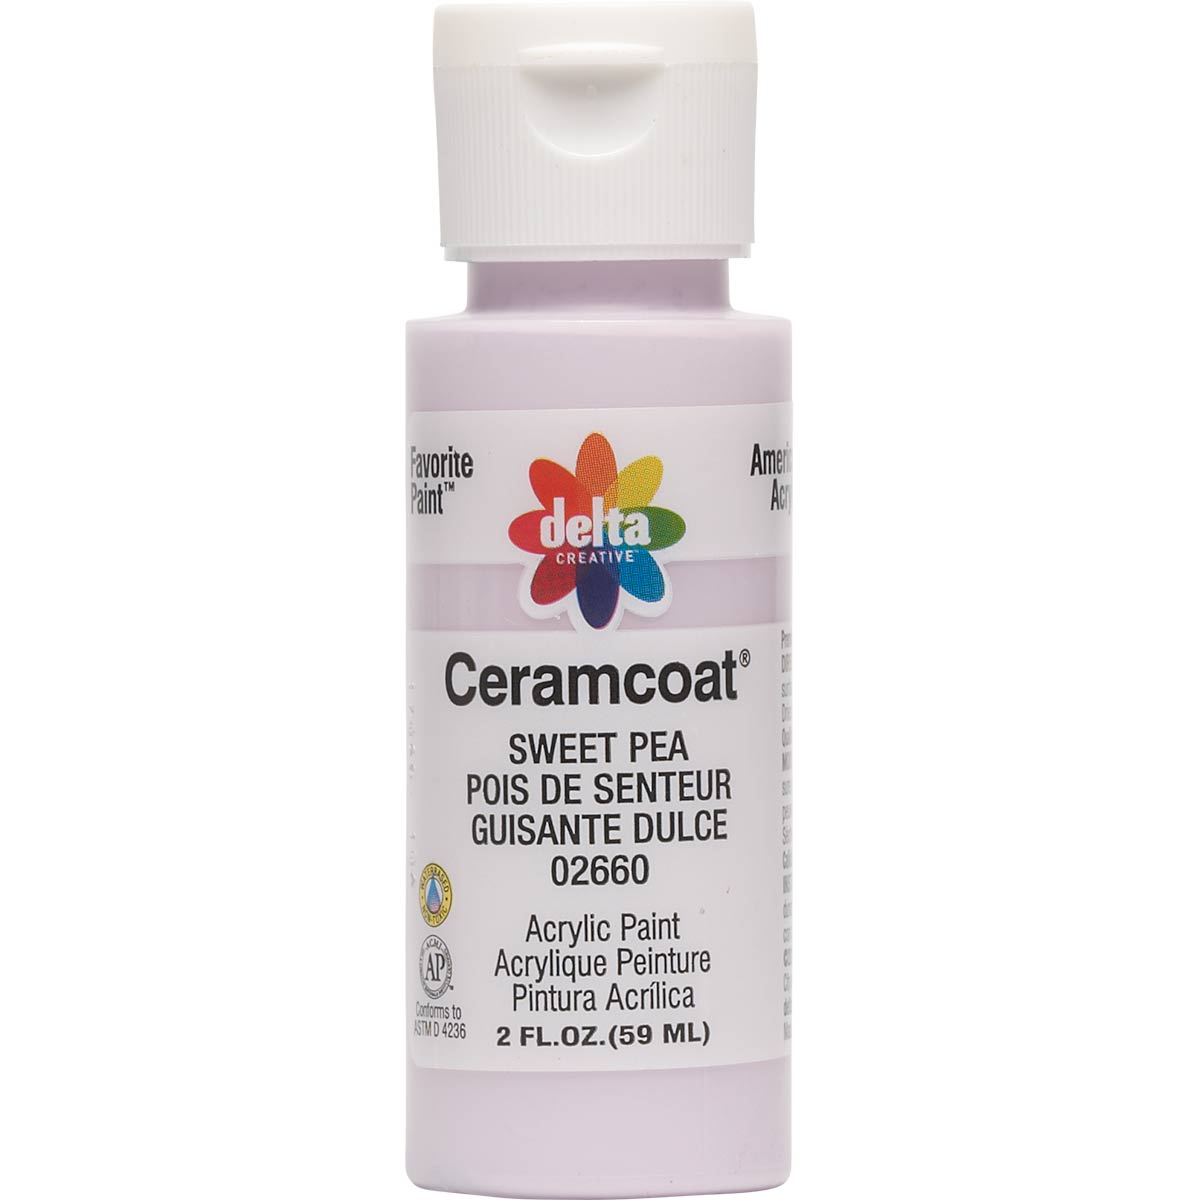 Delta Ceramcoat Acrylic Paint - Sweet Pea, 2 oz. - 026600202W